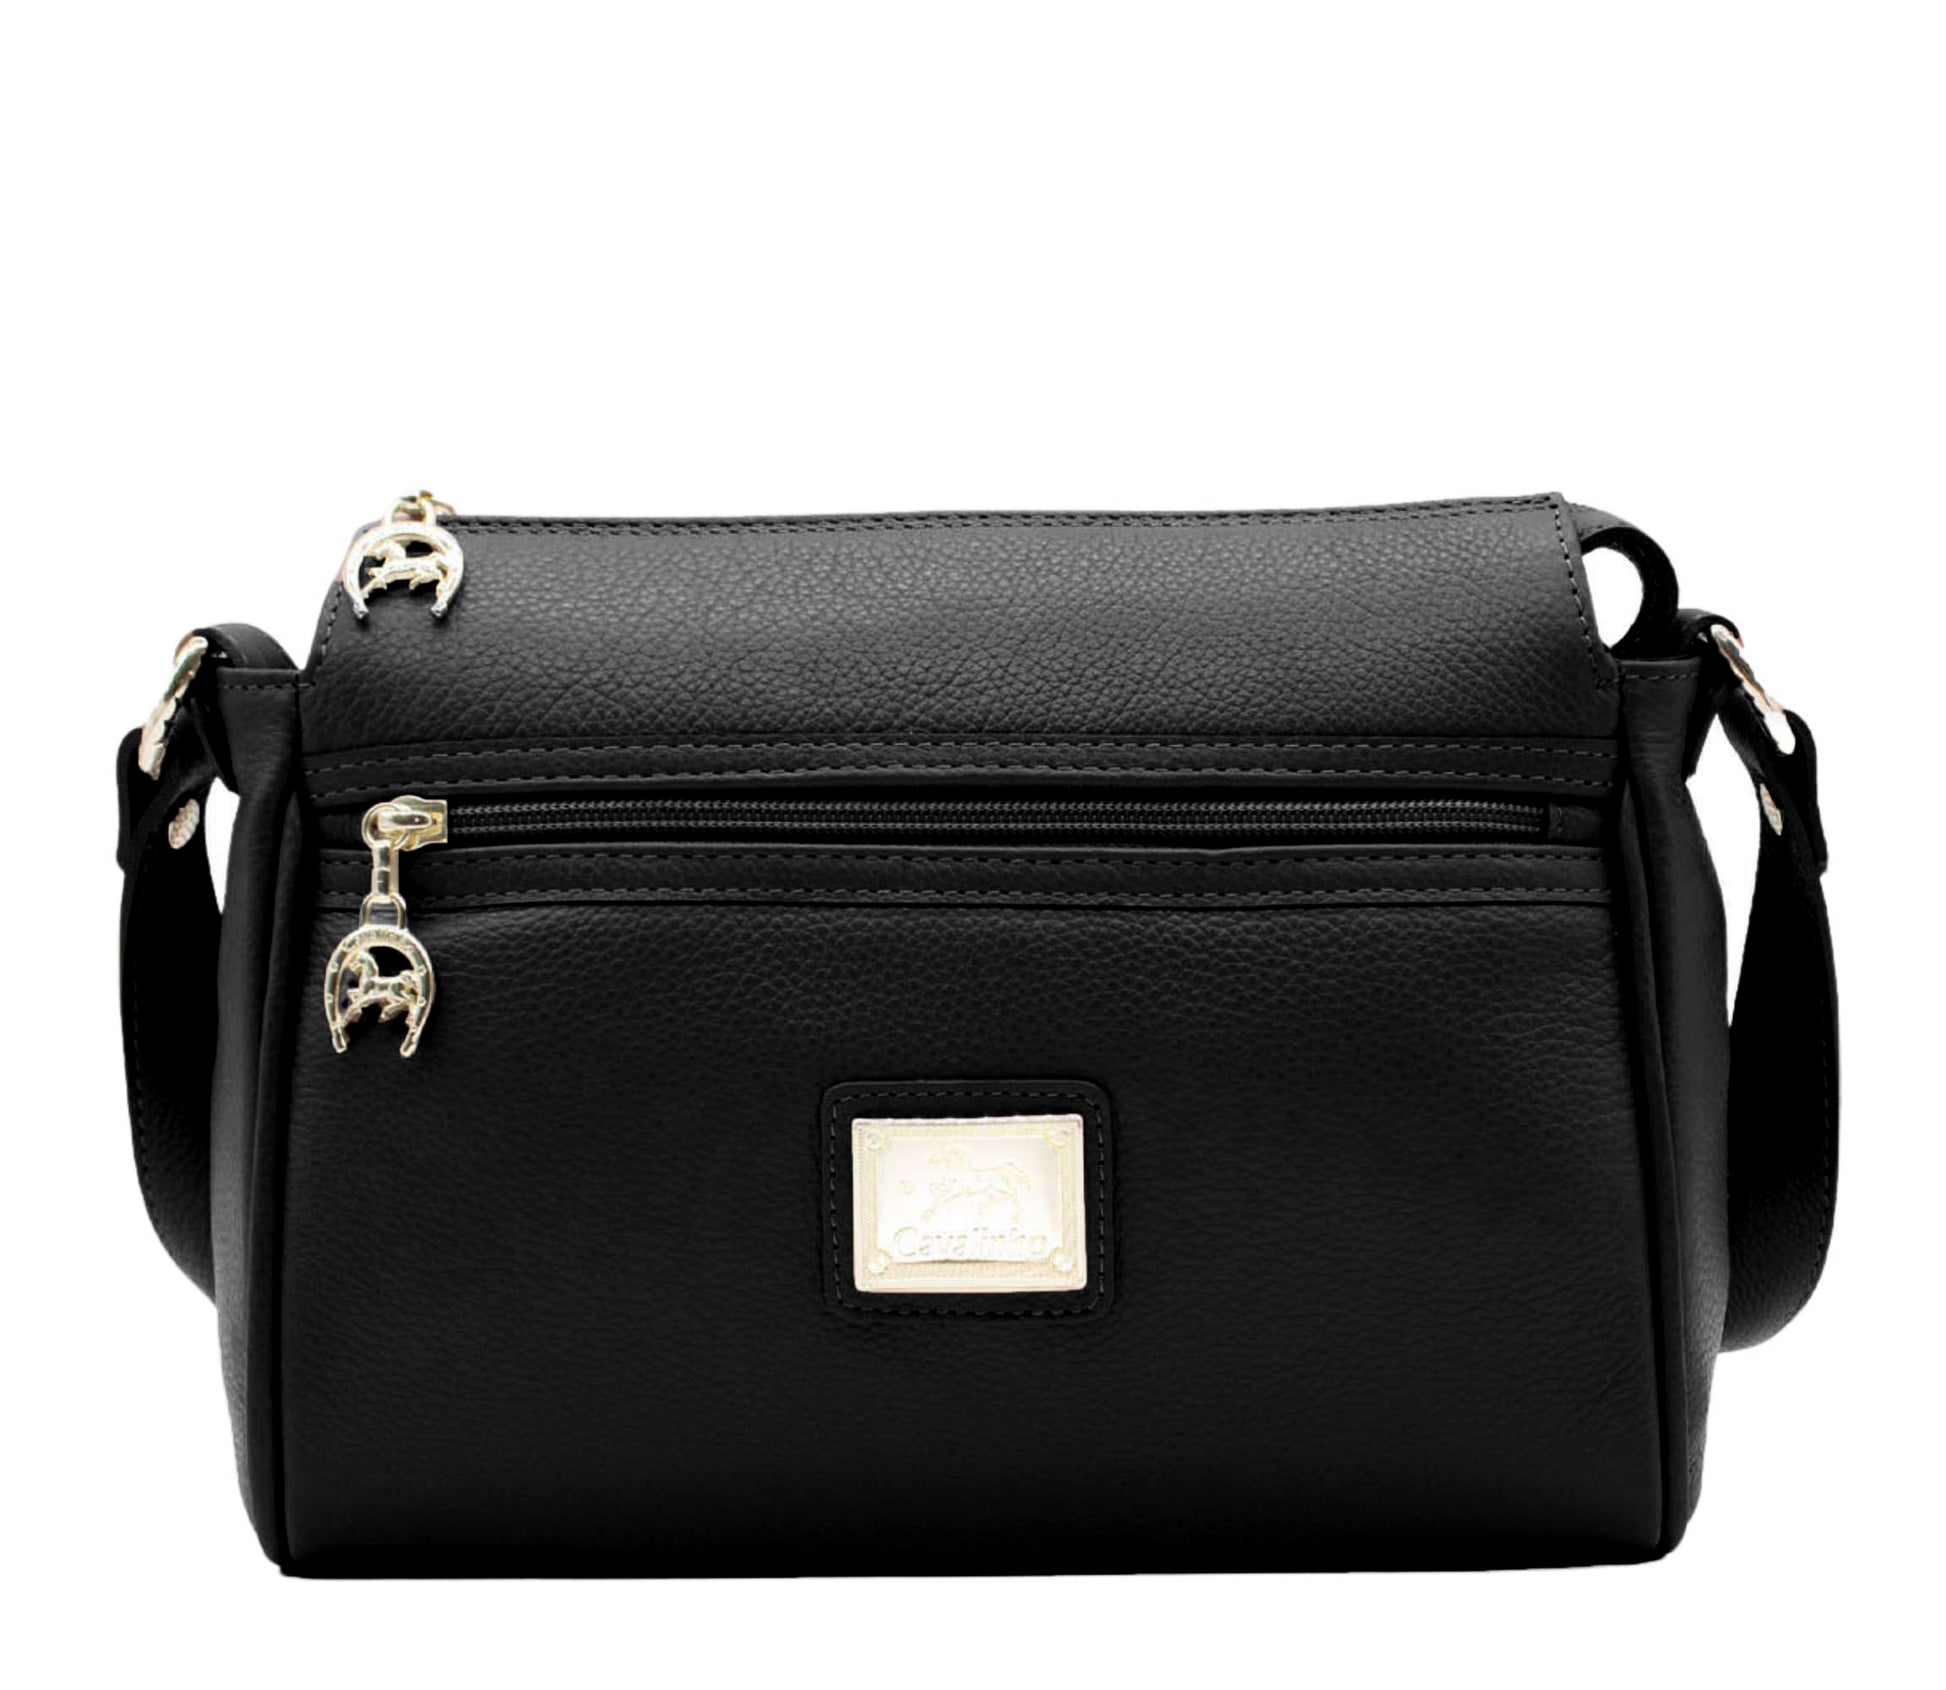 Cavalinho Muse Leather Crossbody Bag - Black - 18300373.01.99